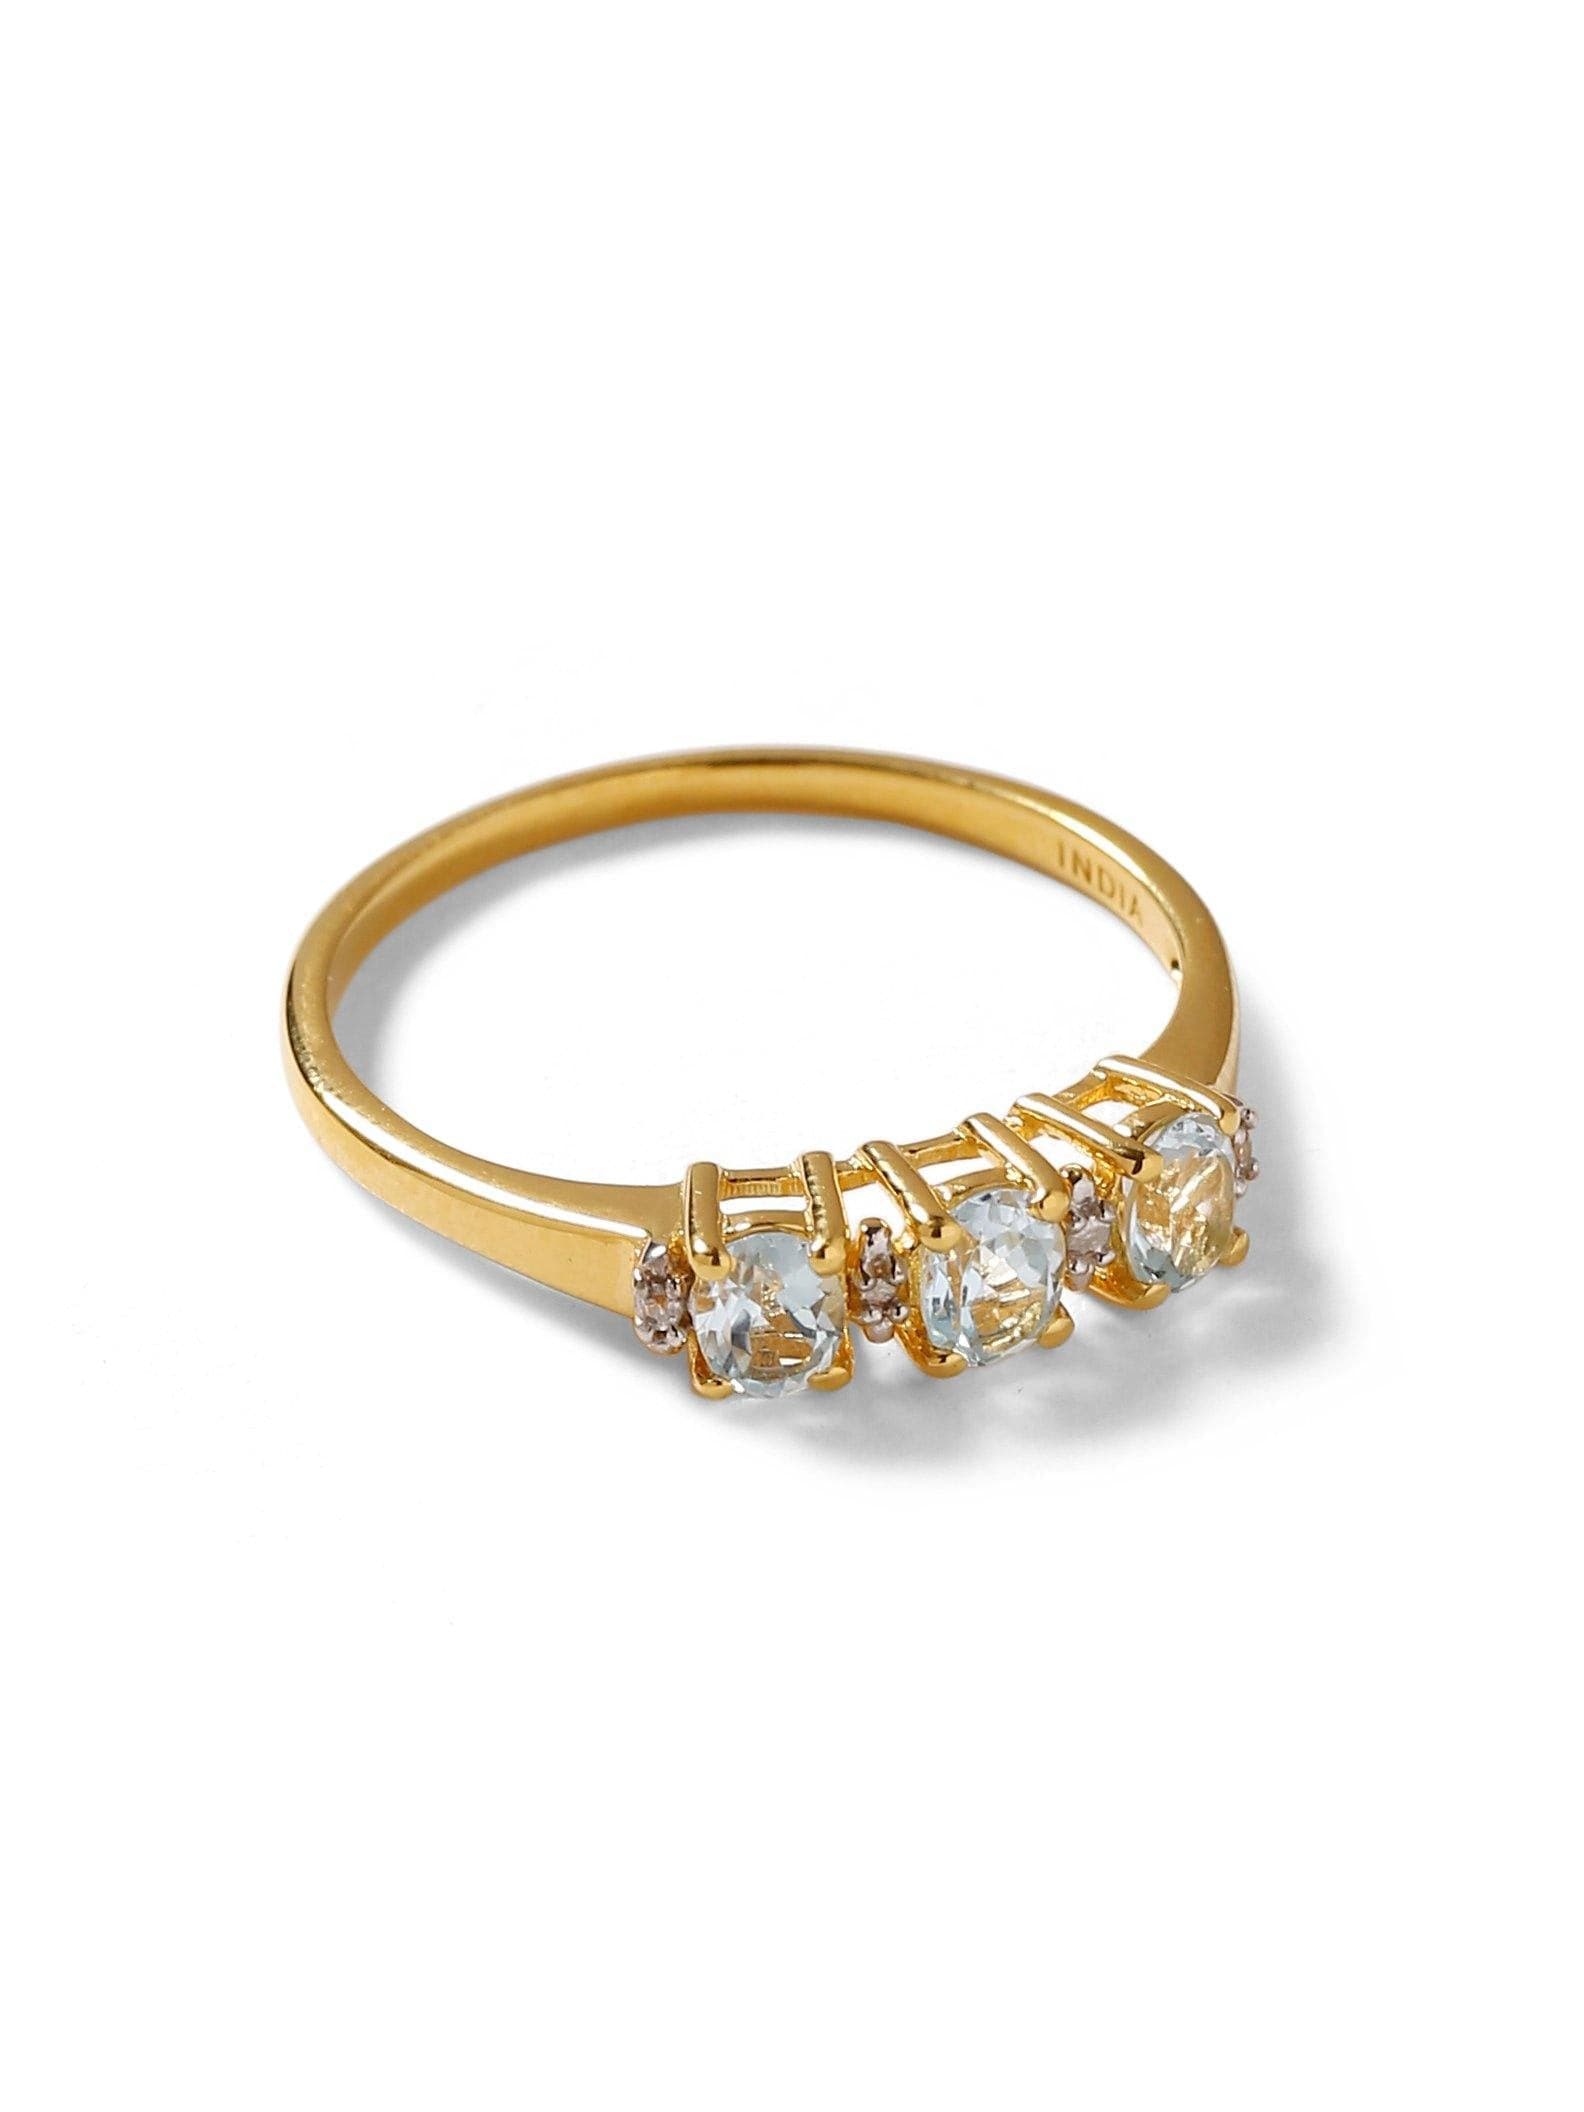 0.46 Ct. Sky Blue Topaz Solid 10k Yellow Gold Ring Jewelry - YoTreasure